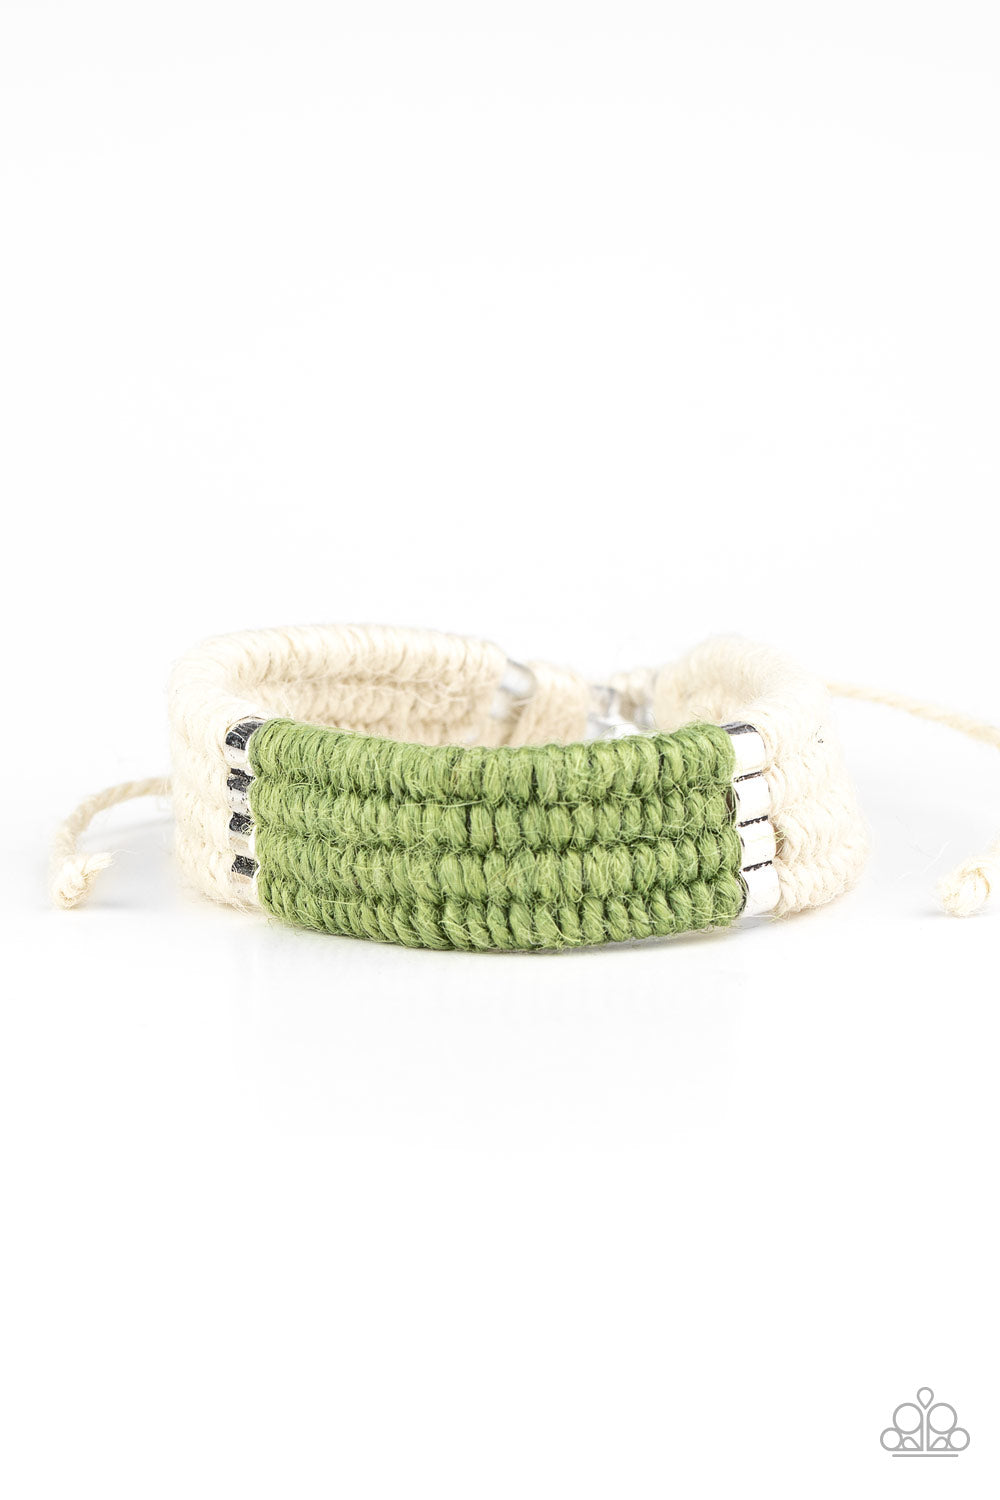 Paparazzi Accessories - Hot Cross BUNGEE - Green Bracelet